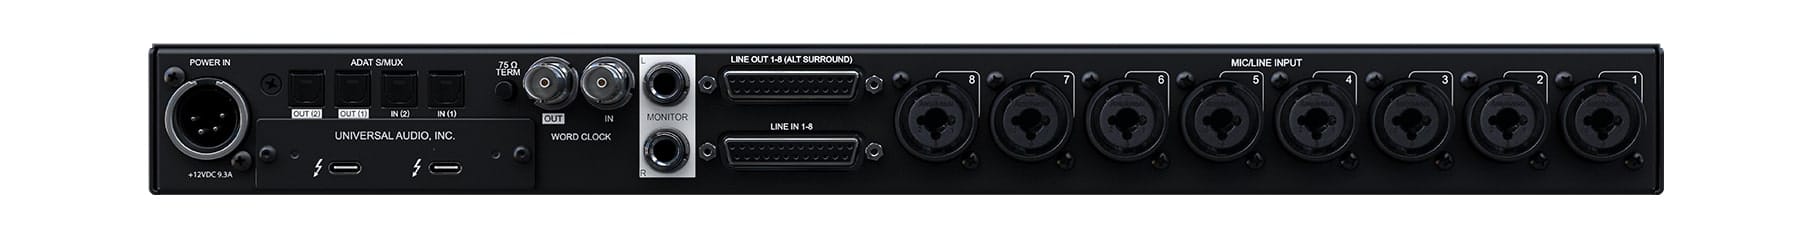 Universal Audio | Apollo x8p Heritage Edition 16 x 22 Thunderbolt 3 Audio Interface with UAD DSP